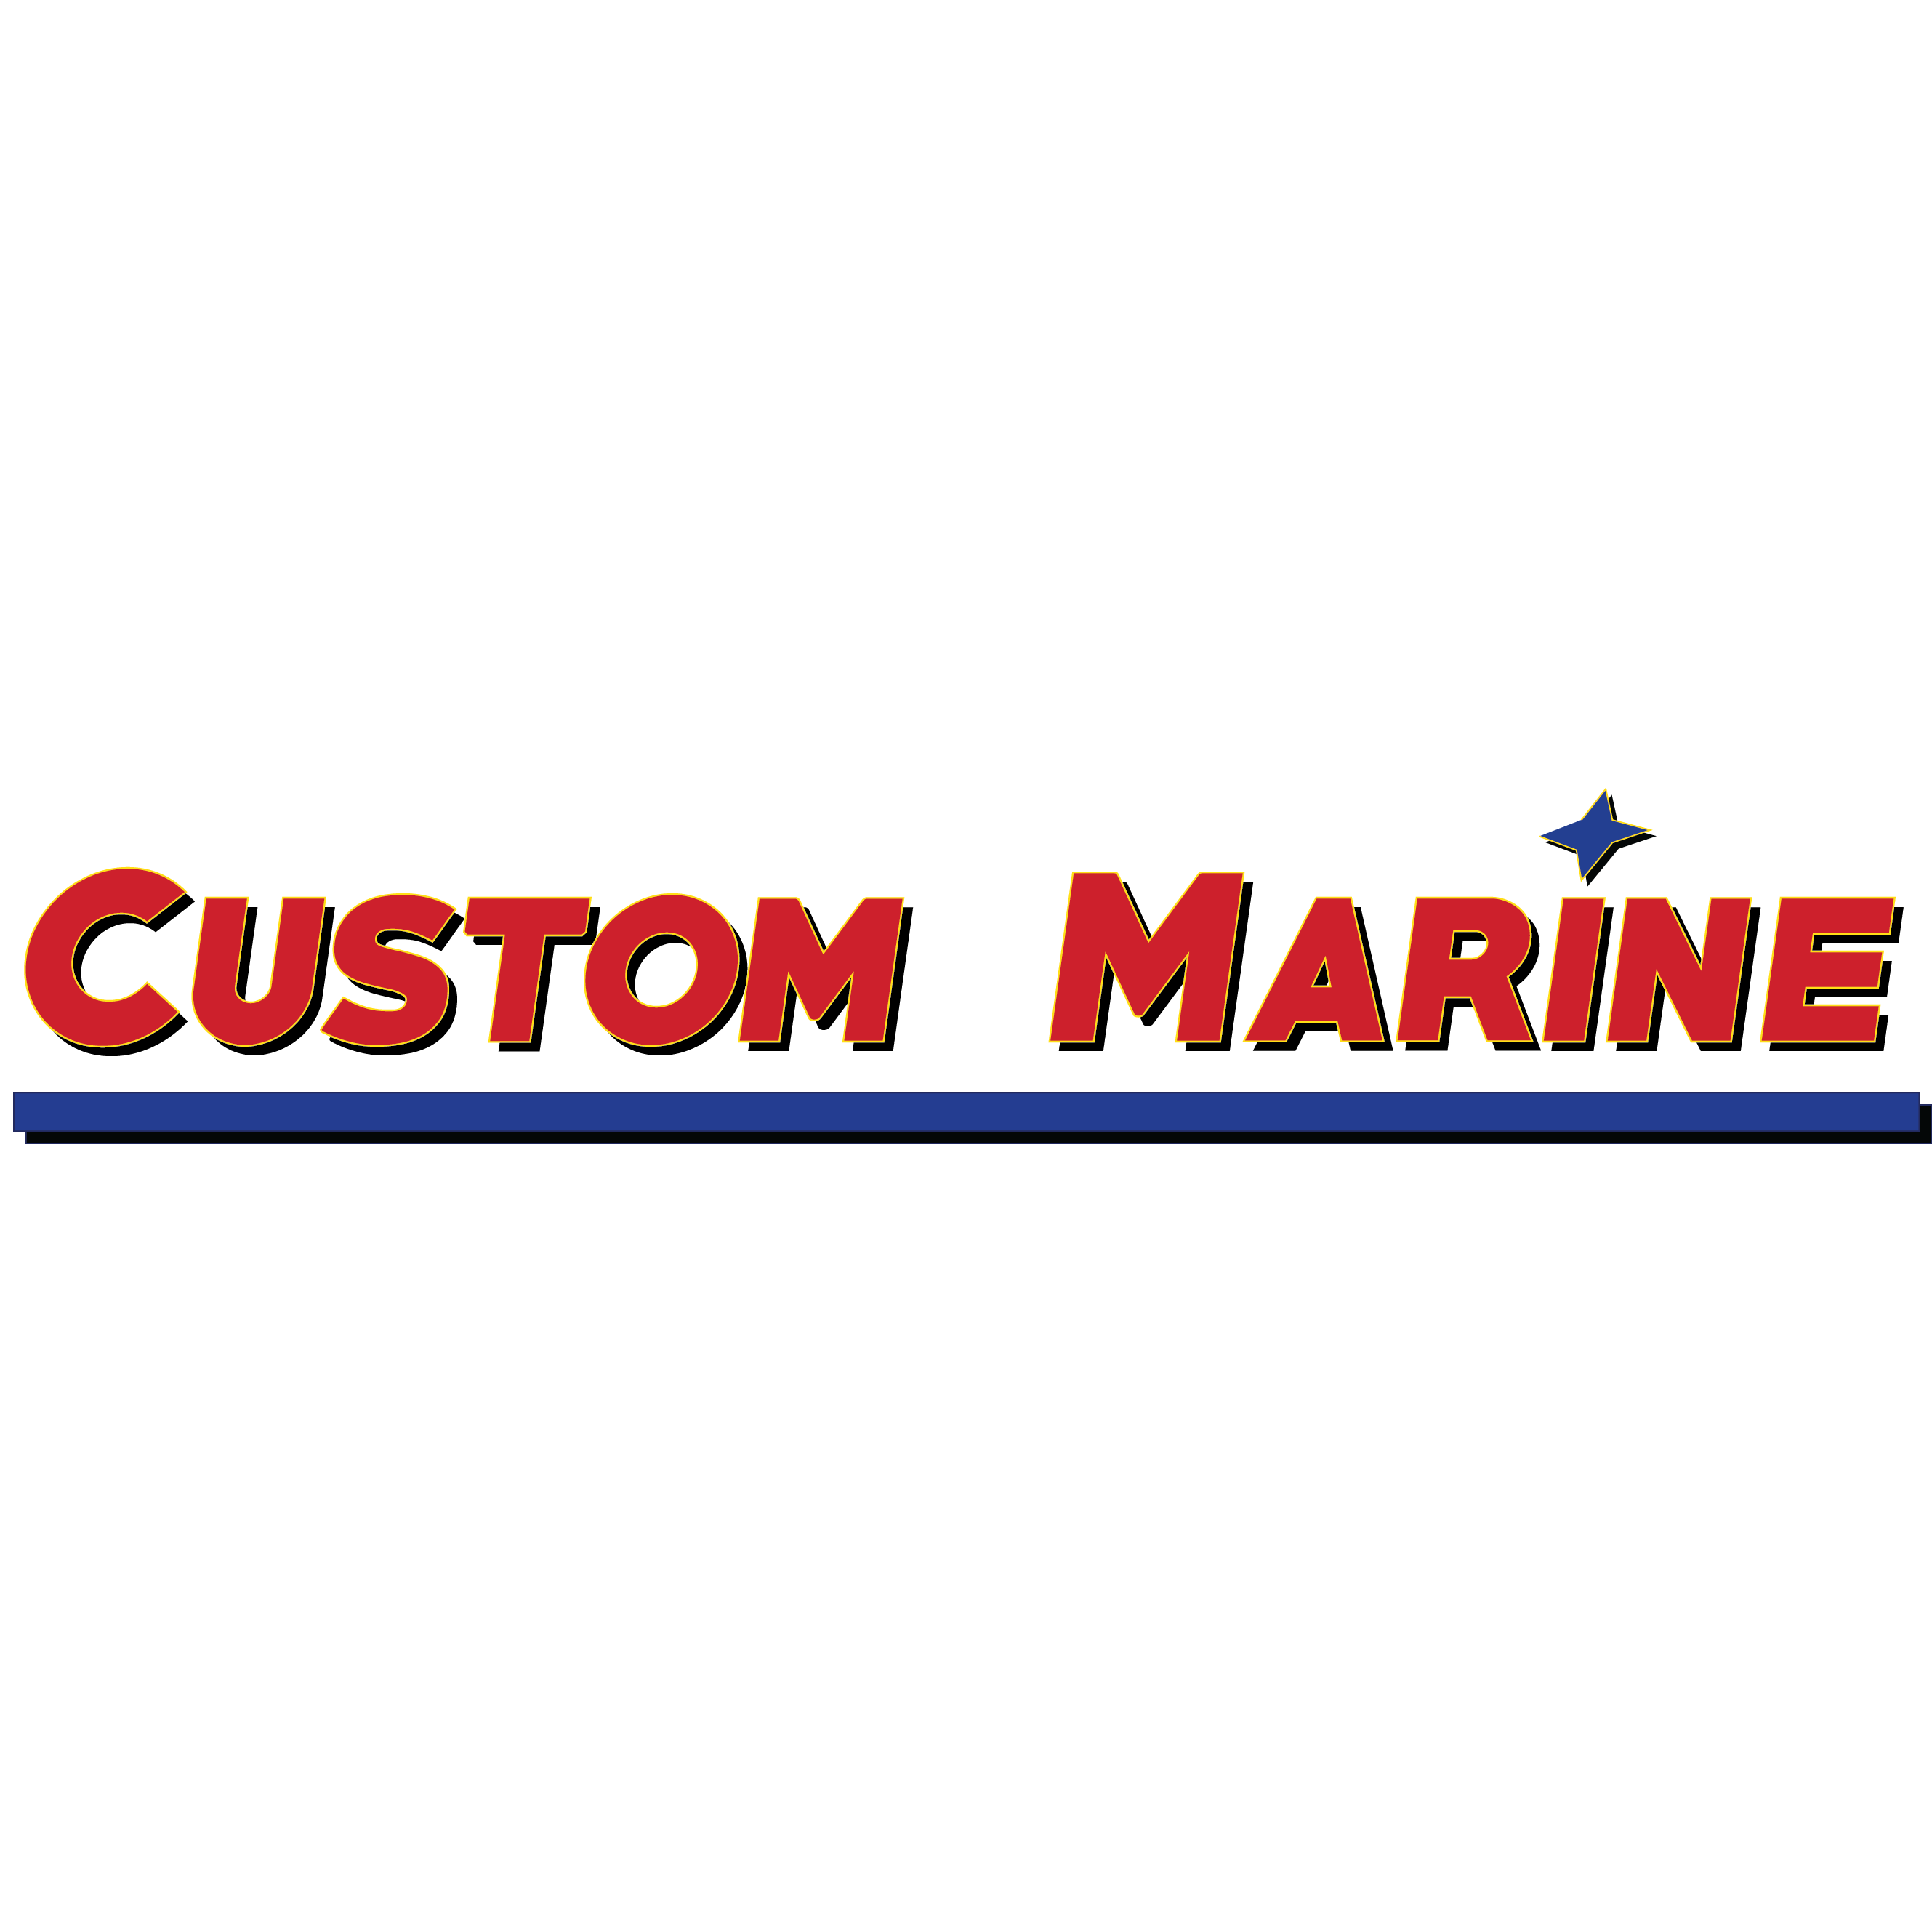 Custom Marine - Statesboro, GA 30458 - (912)681-7777 | ShowMeLocal.com